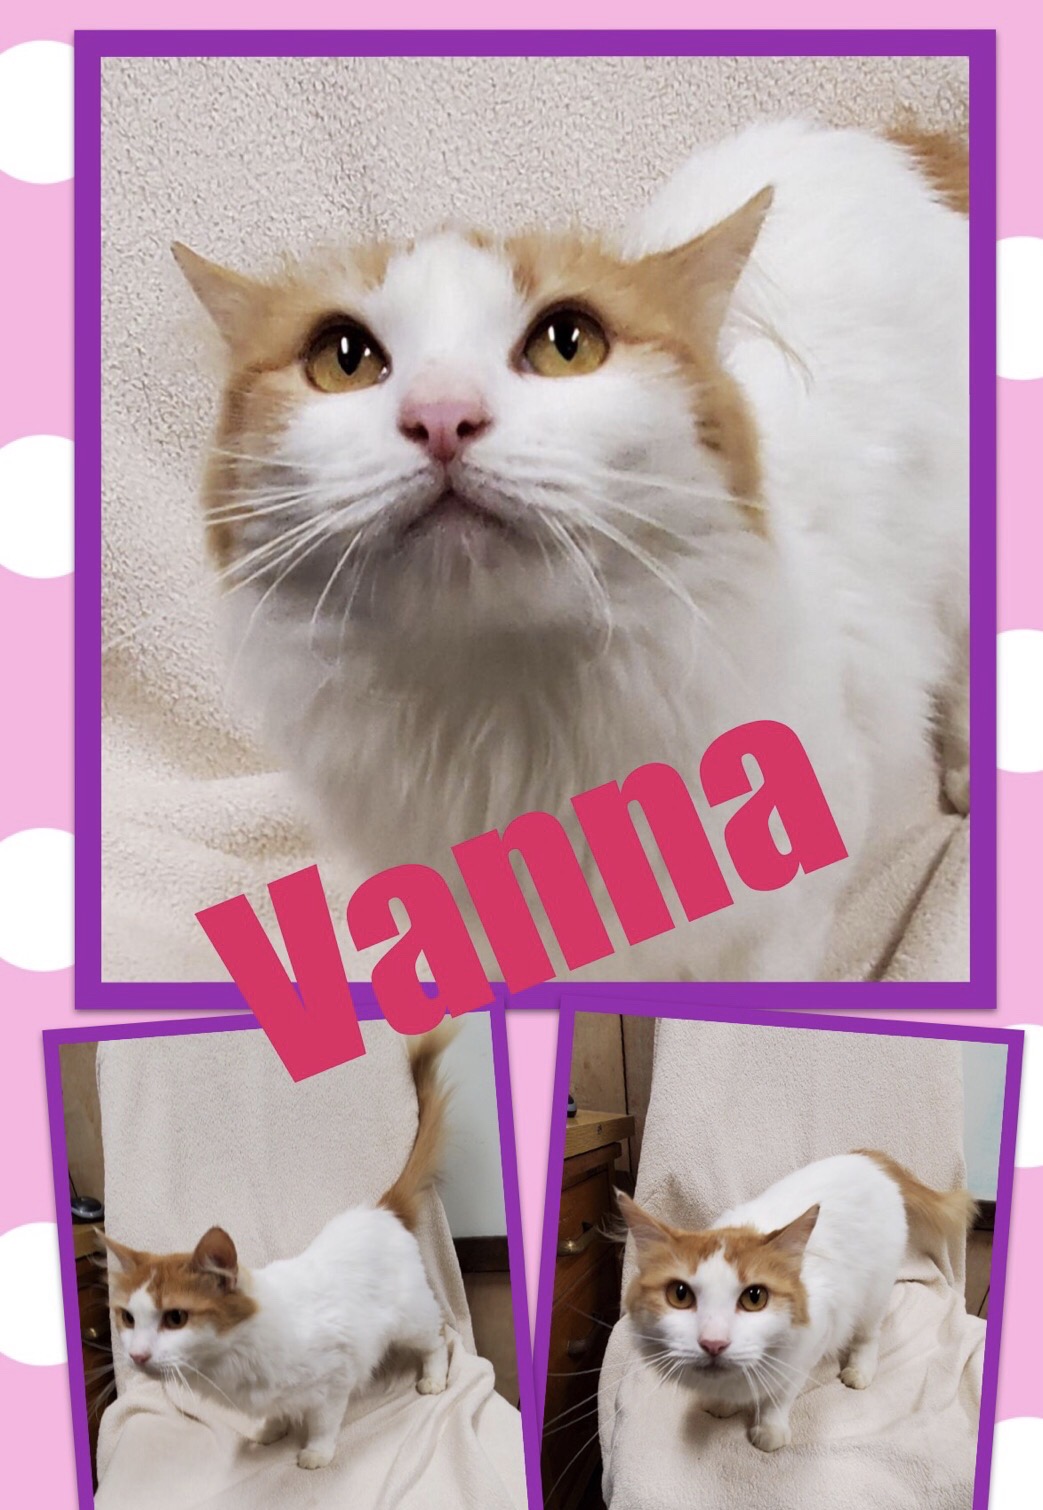 Sulphur Springs Animal Shelter Pet of the Week: Meet Vanna!